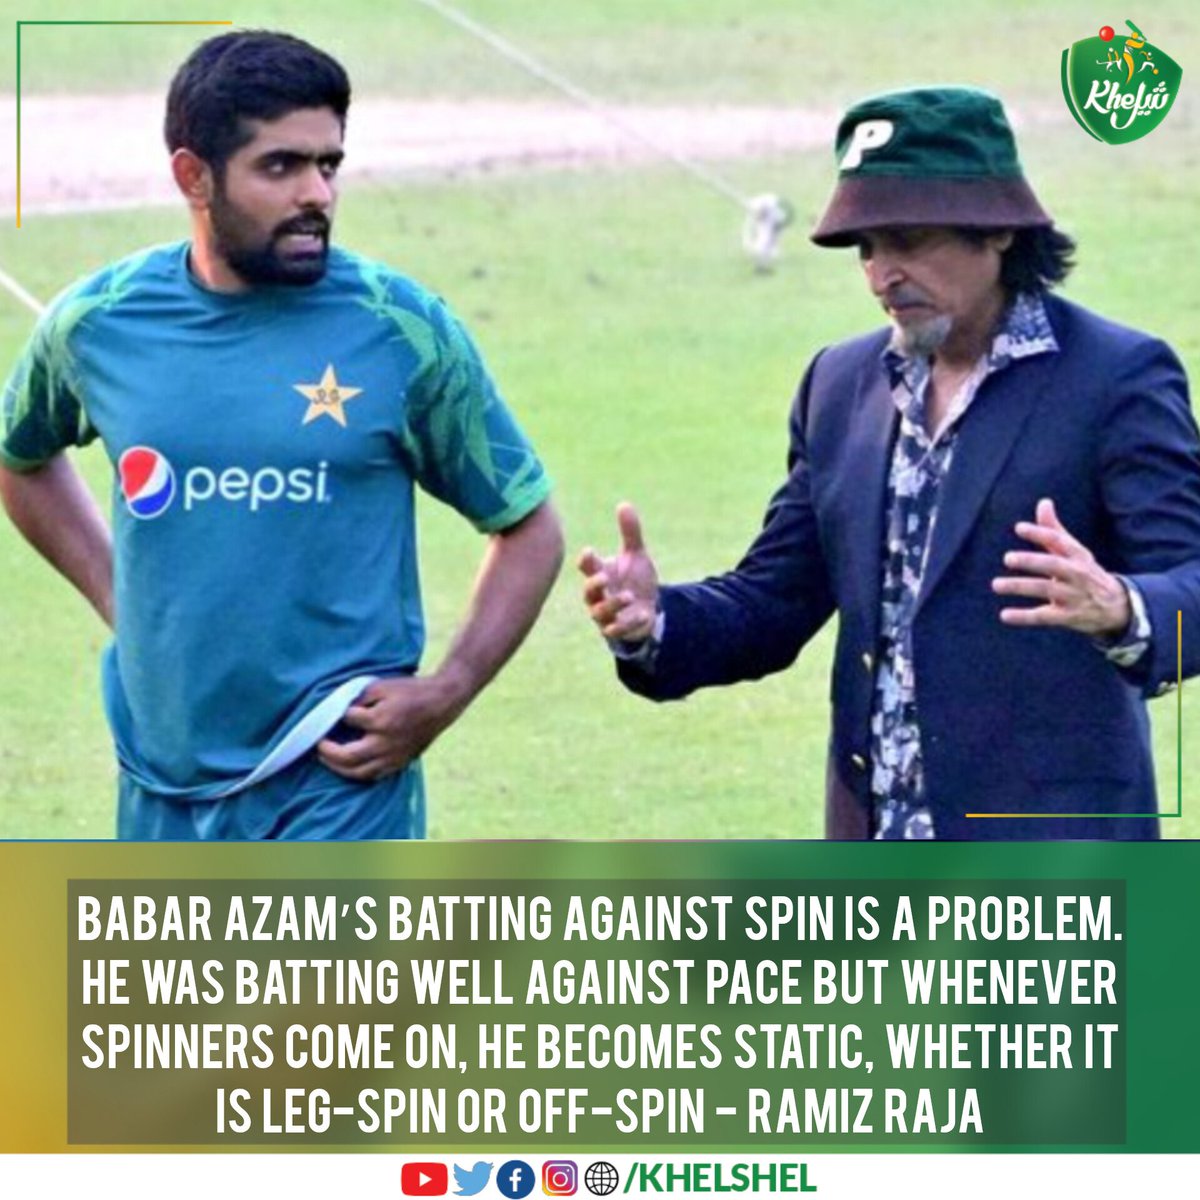 Ramiz Raja highlights Babar Azam's batting issues against spin, do you agree? #ENGvPAK | #Cricket | #Pakistan | #RamizRaja | #BabarAzam | #Edgbaston | #England